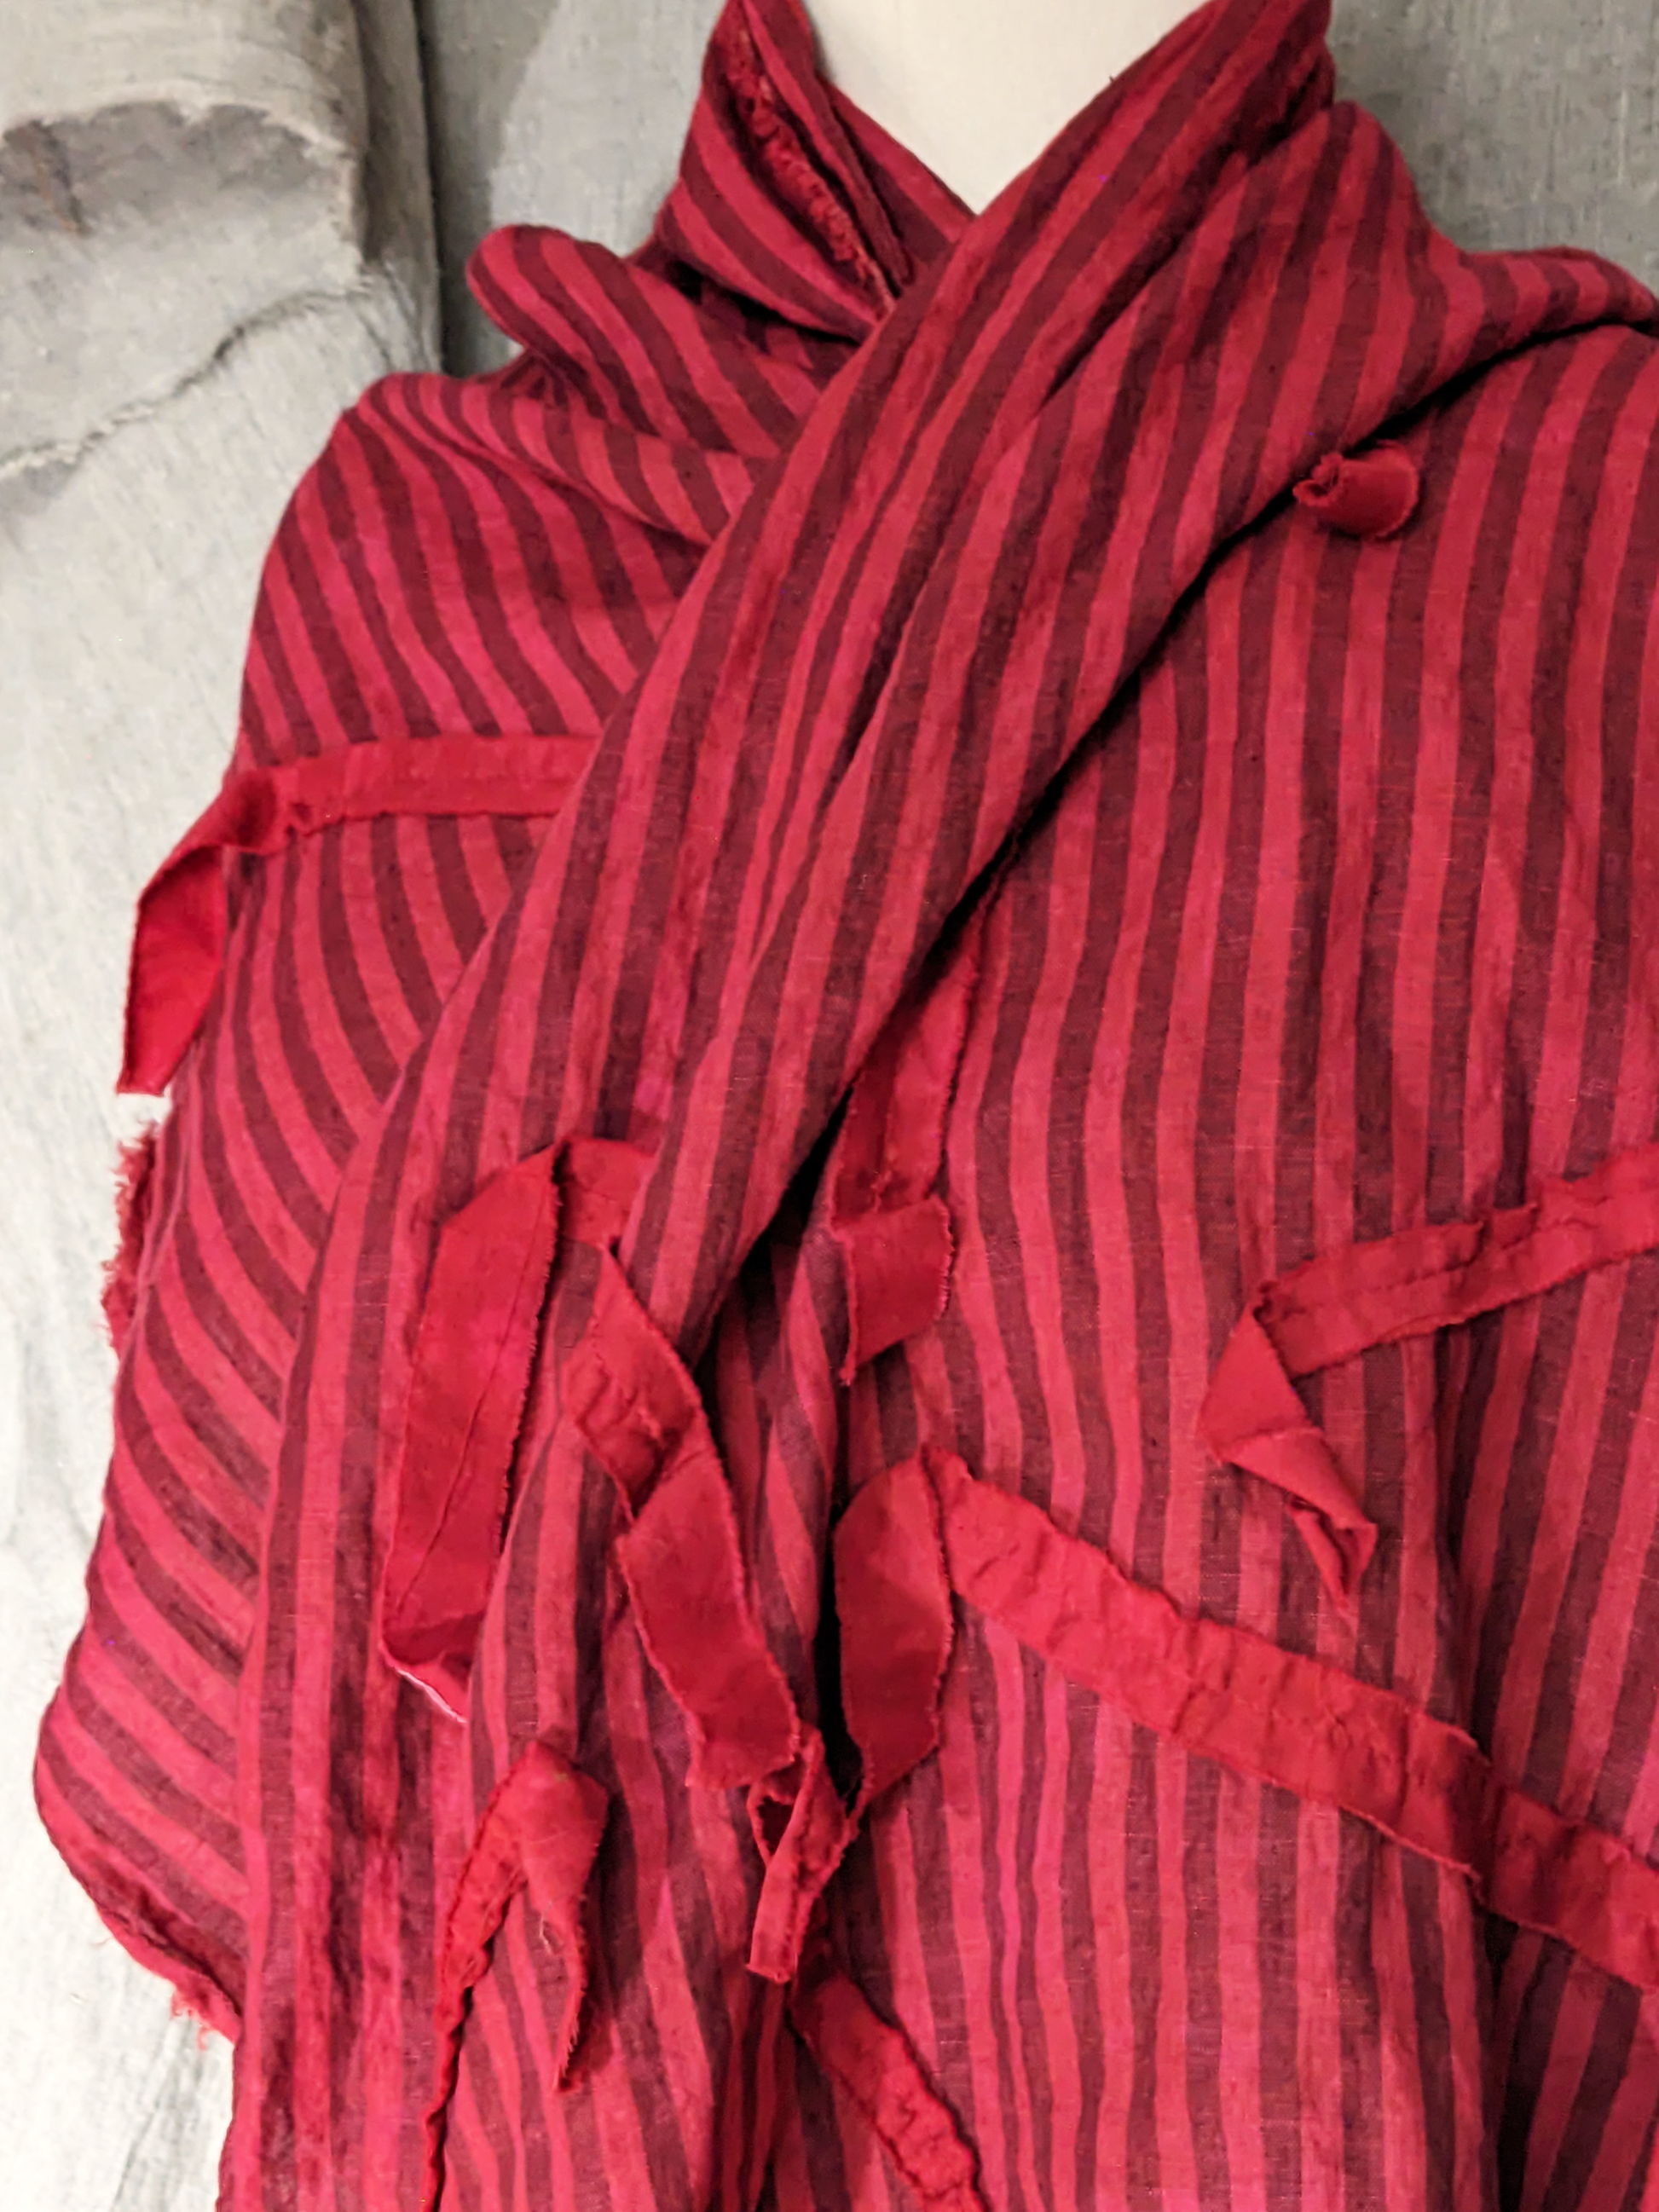 scrawl shawl in bold red from secret lentil